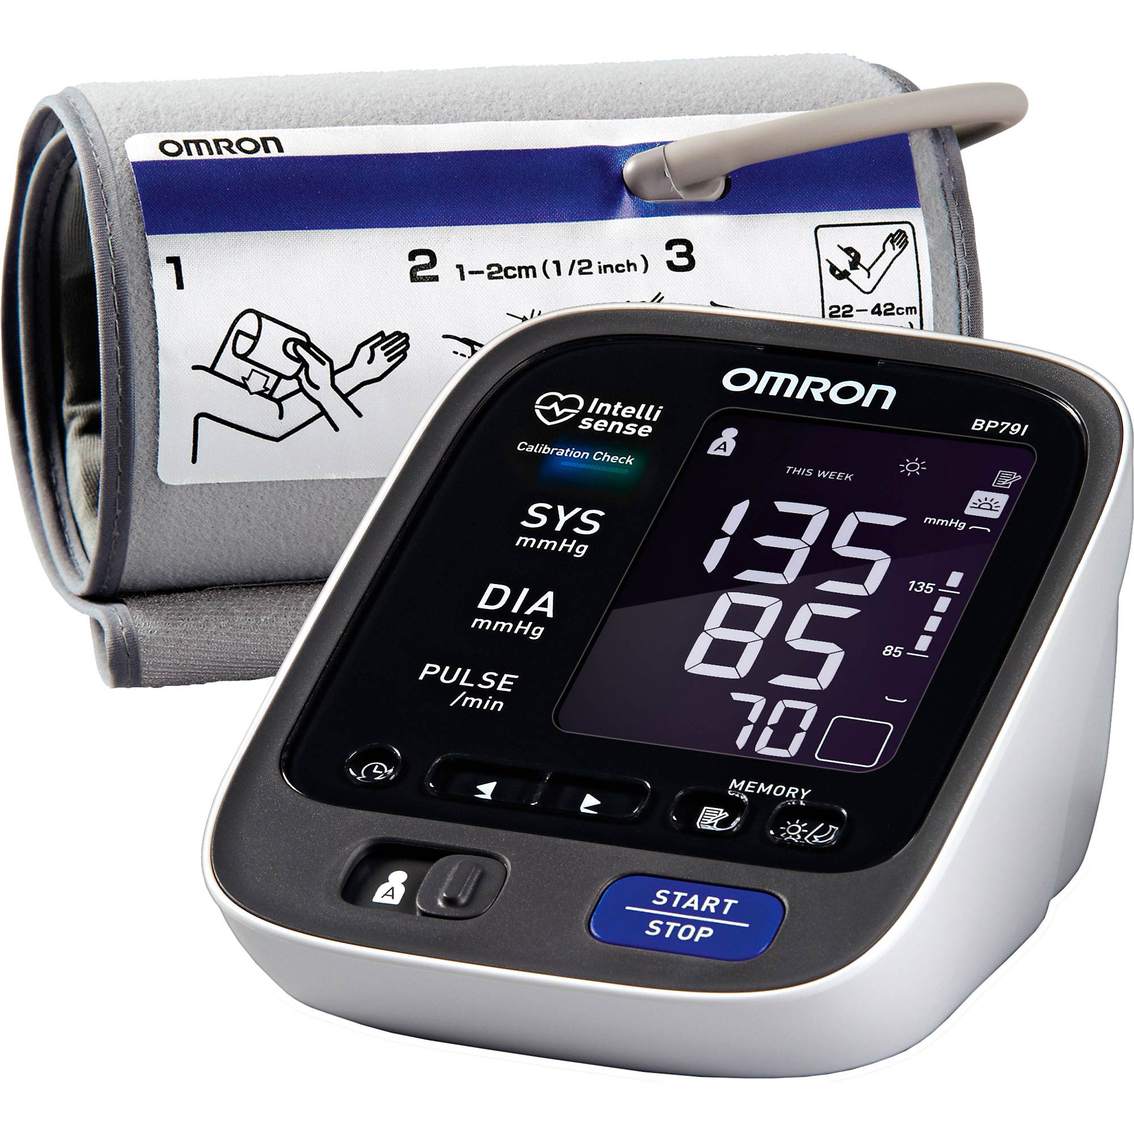 Omron 10 Series Wireless Bluetooth Smart Upper Arm Blood Pressure